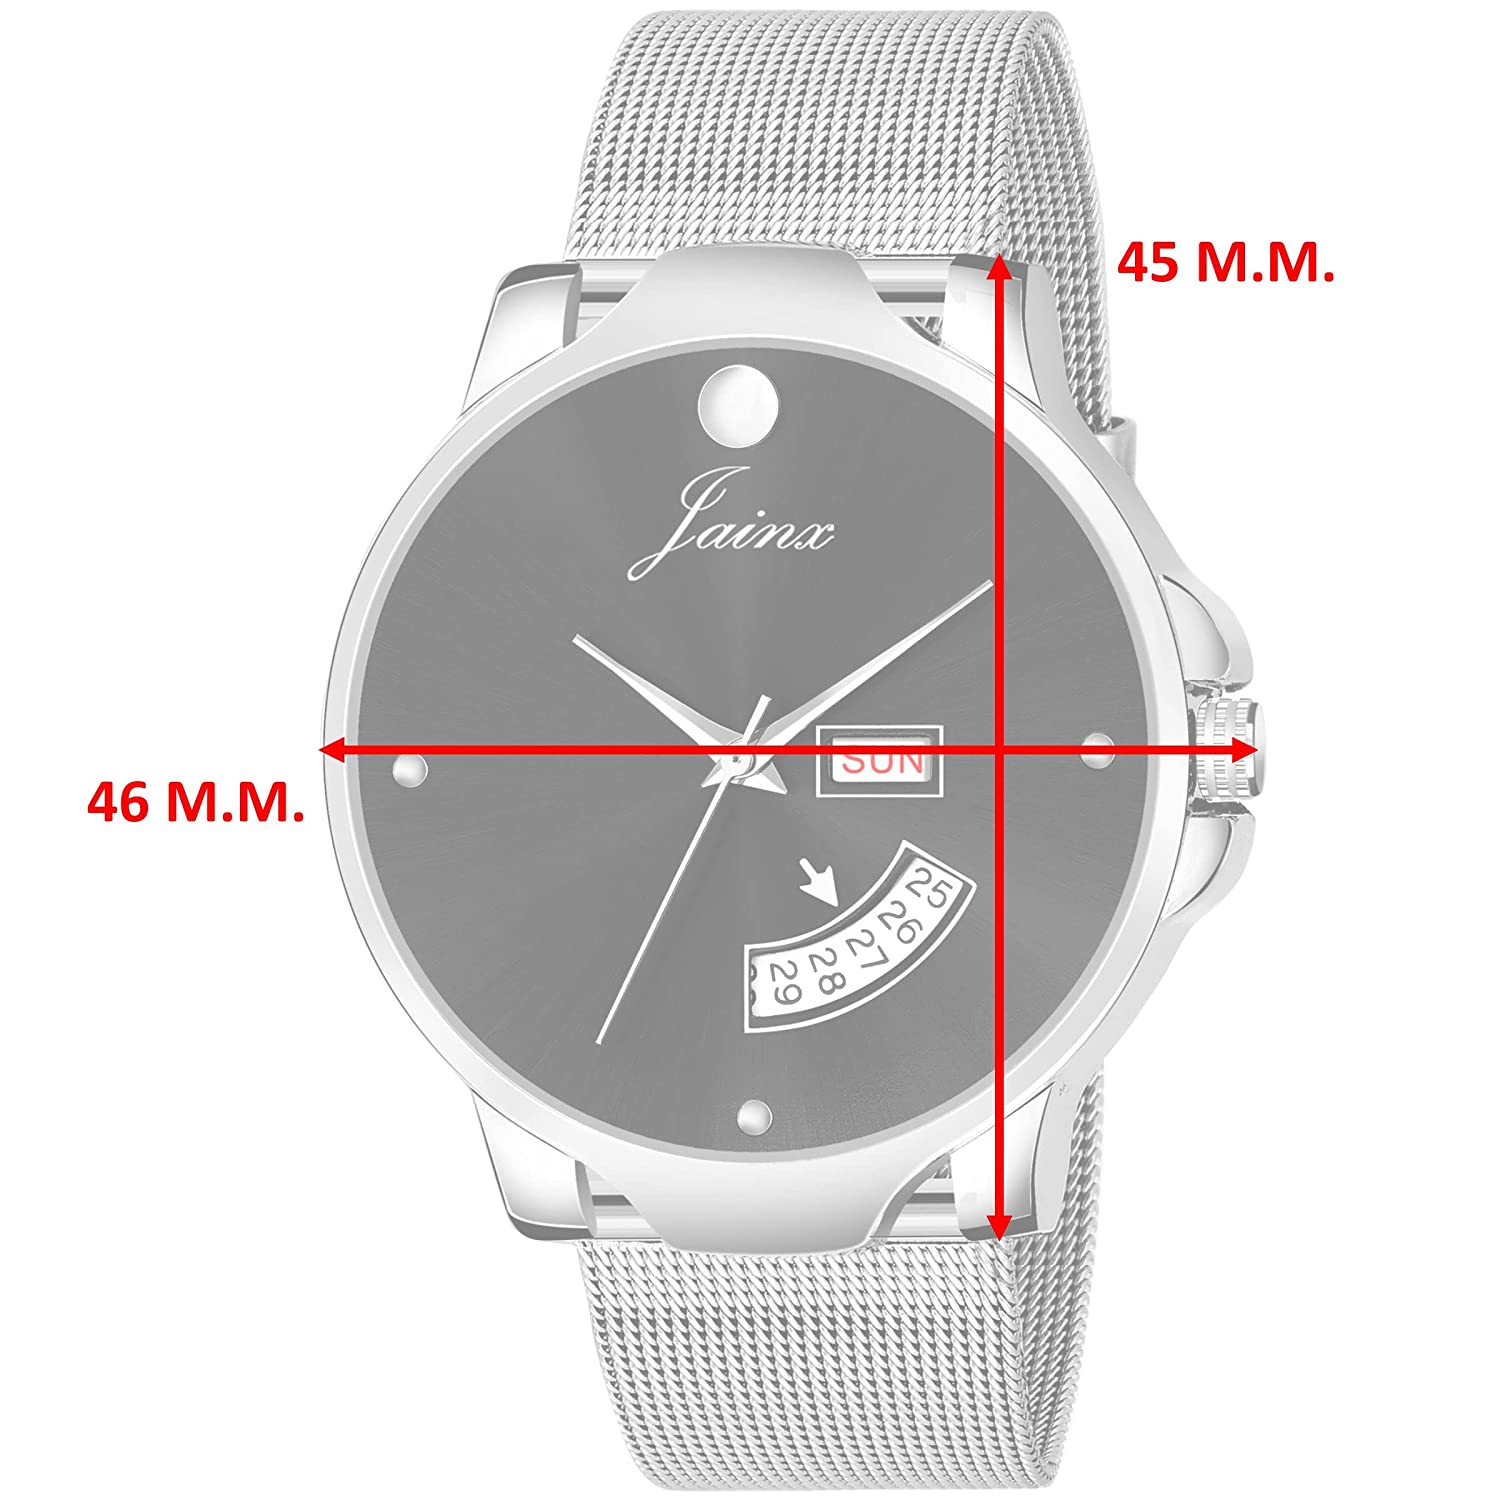 Black Day & Date Steel Mesh Chain Analog Watch - For Men JM7118 - Jainx Store